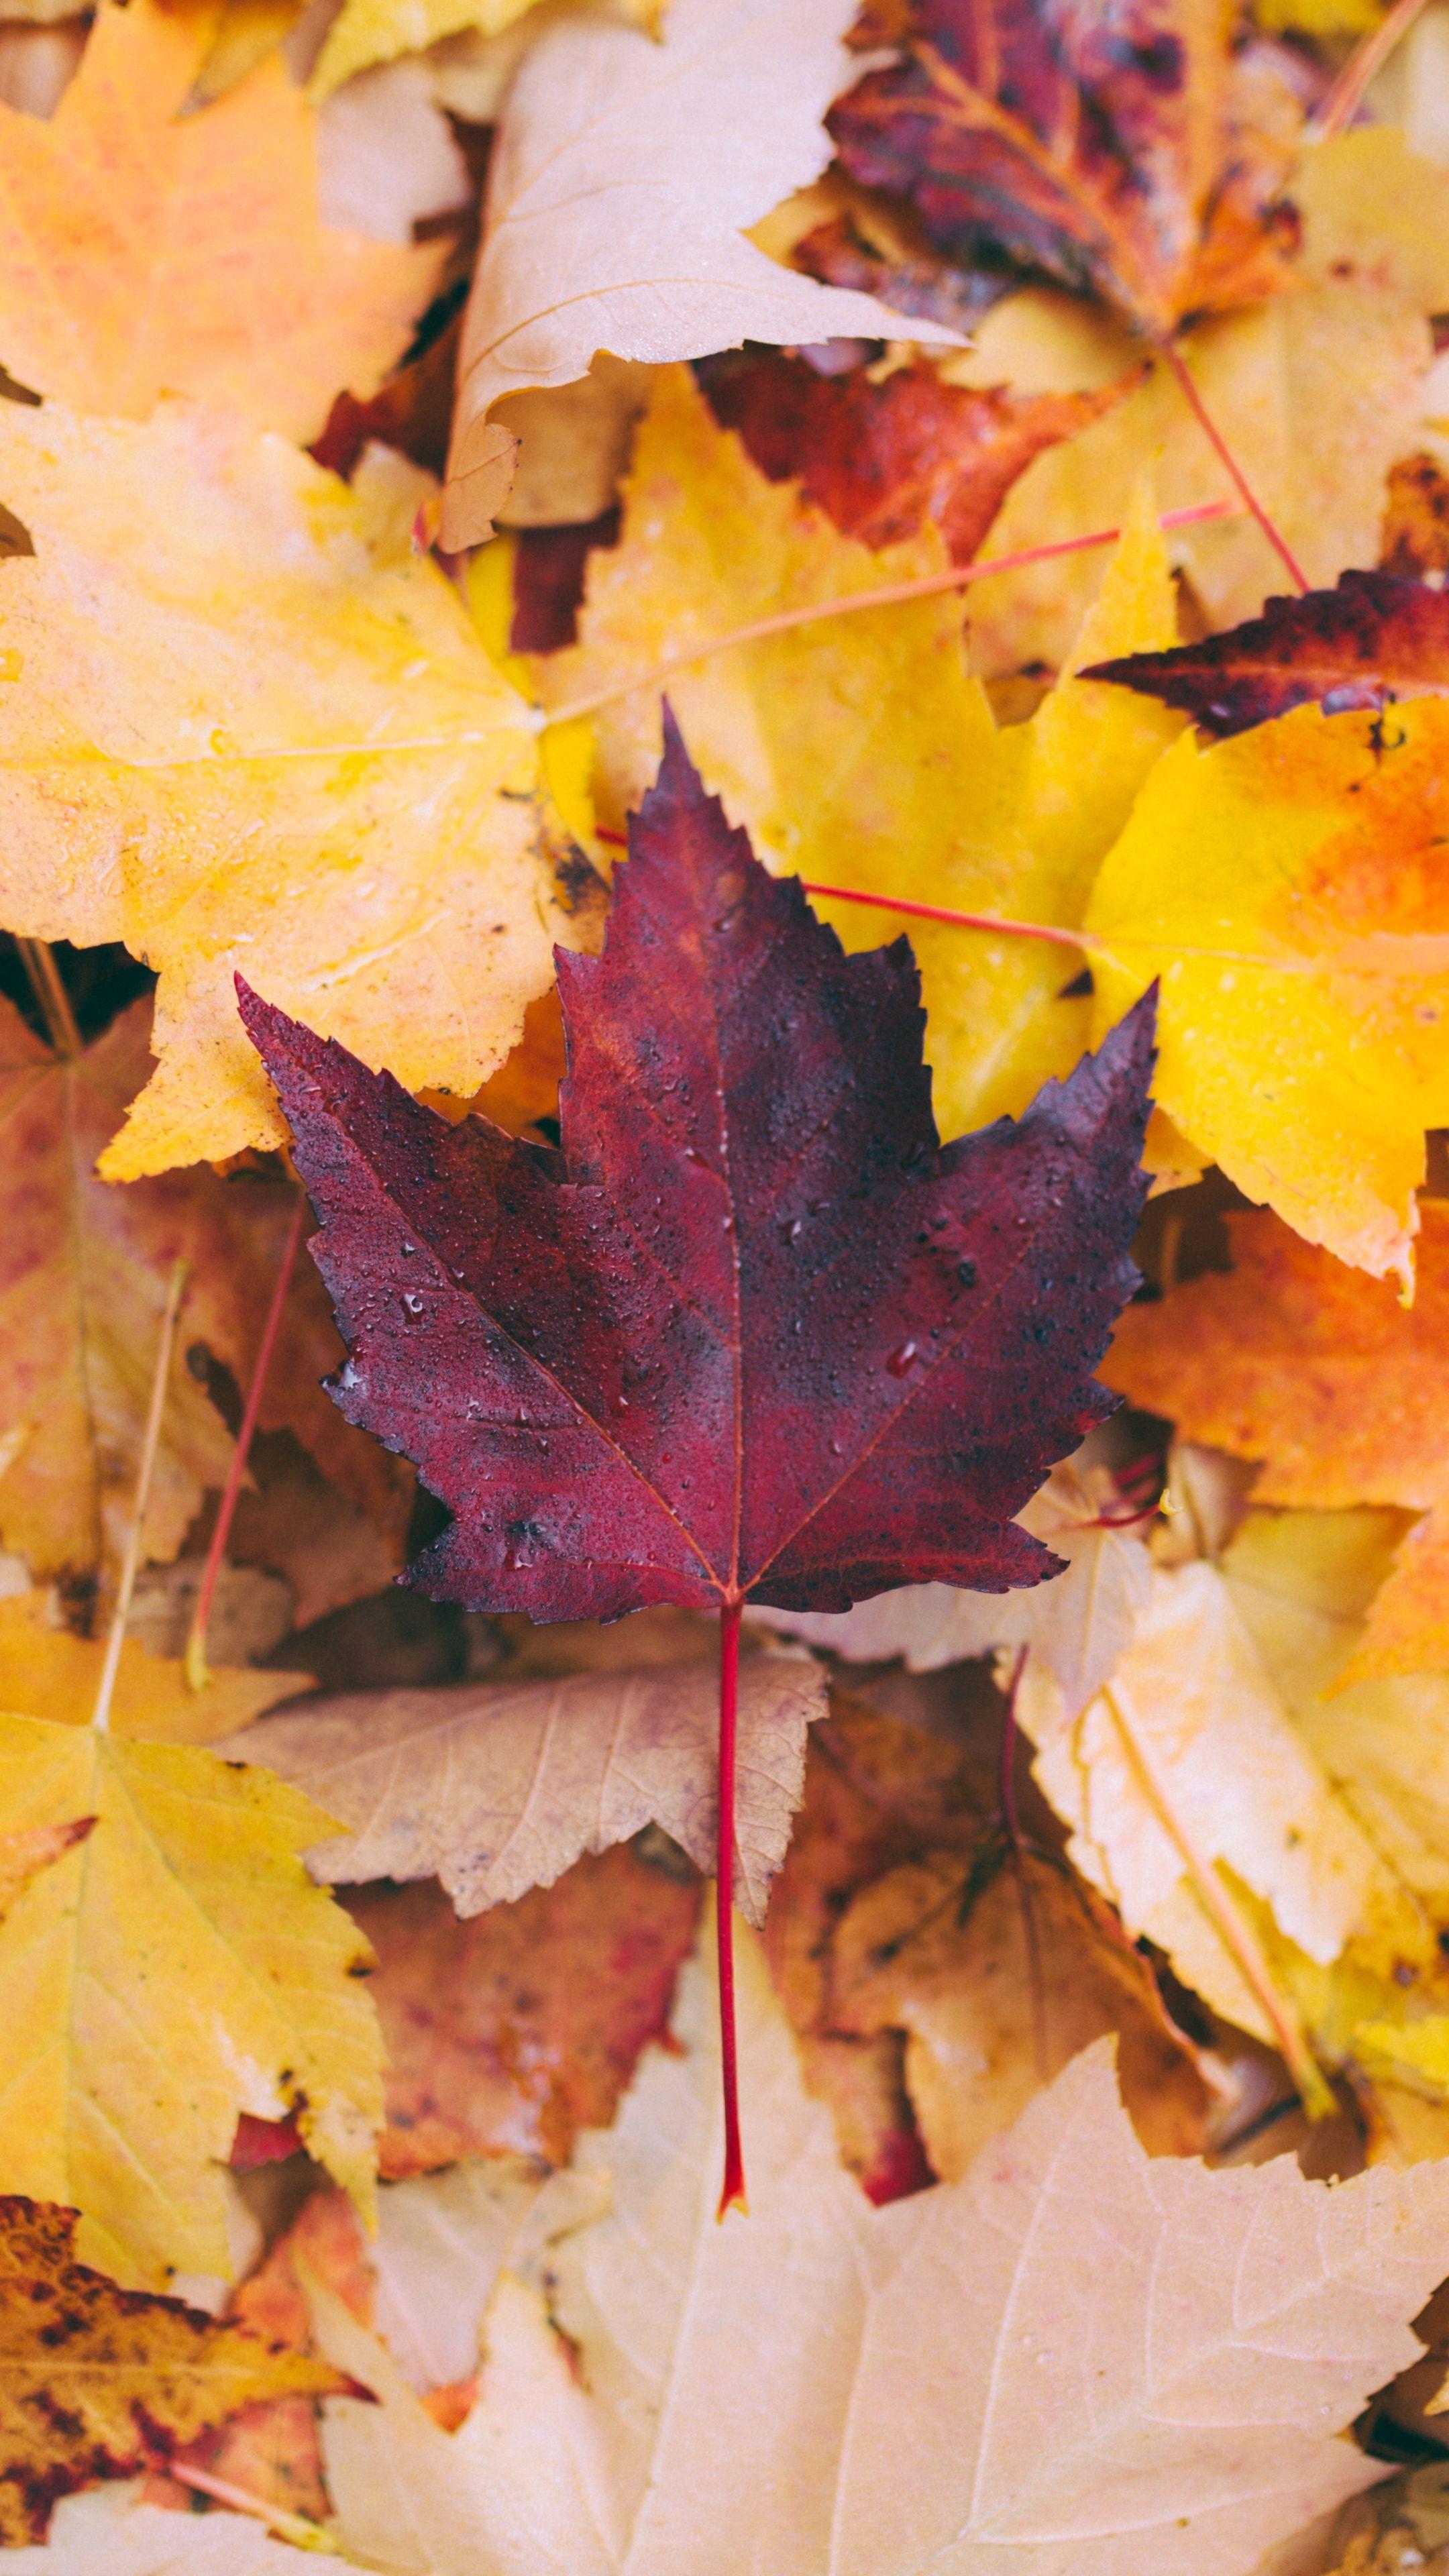 Nature #autumn #maple #leaves #wallpaper HD 4k background for android :). Android wallpaper, Leaf wallpaper, Wallpaper